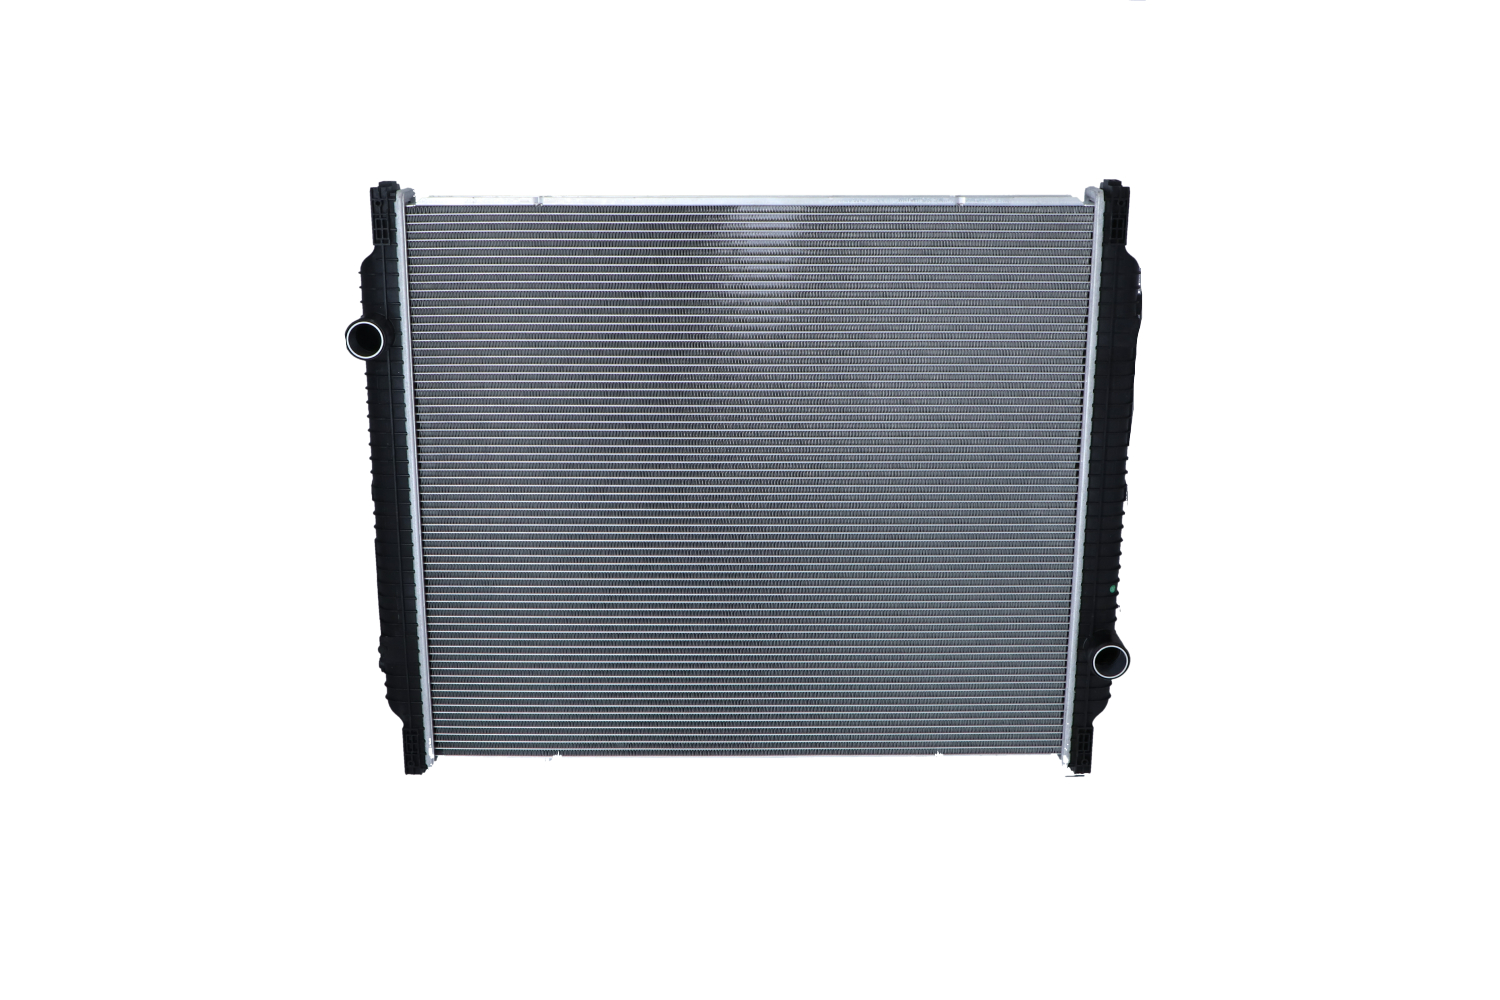 NRF 599563 Engine radiator Aluminium, 810 x 716 x 48 mm, without frame, Brazed cooling fins